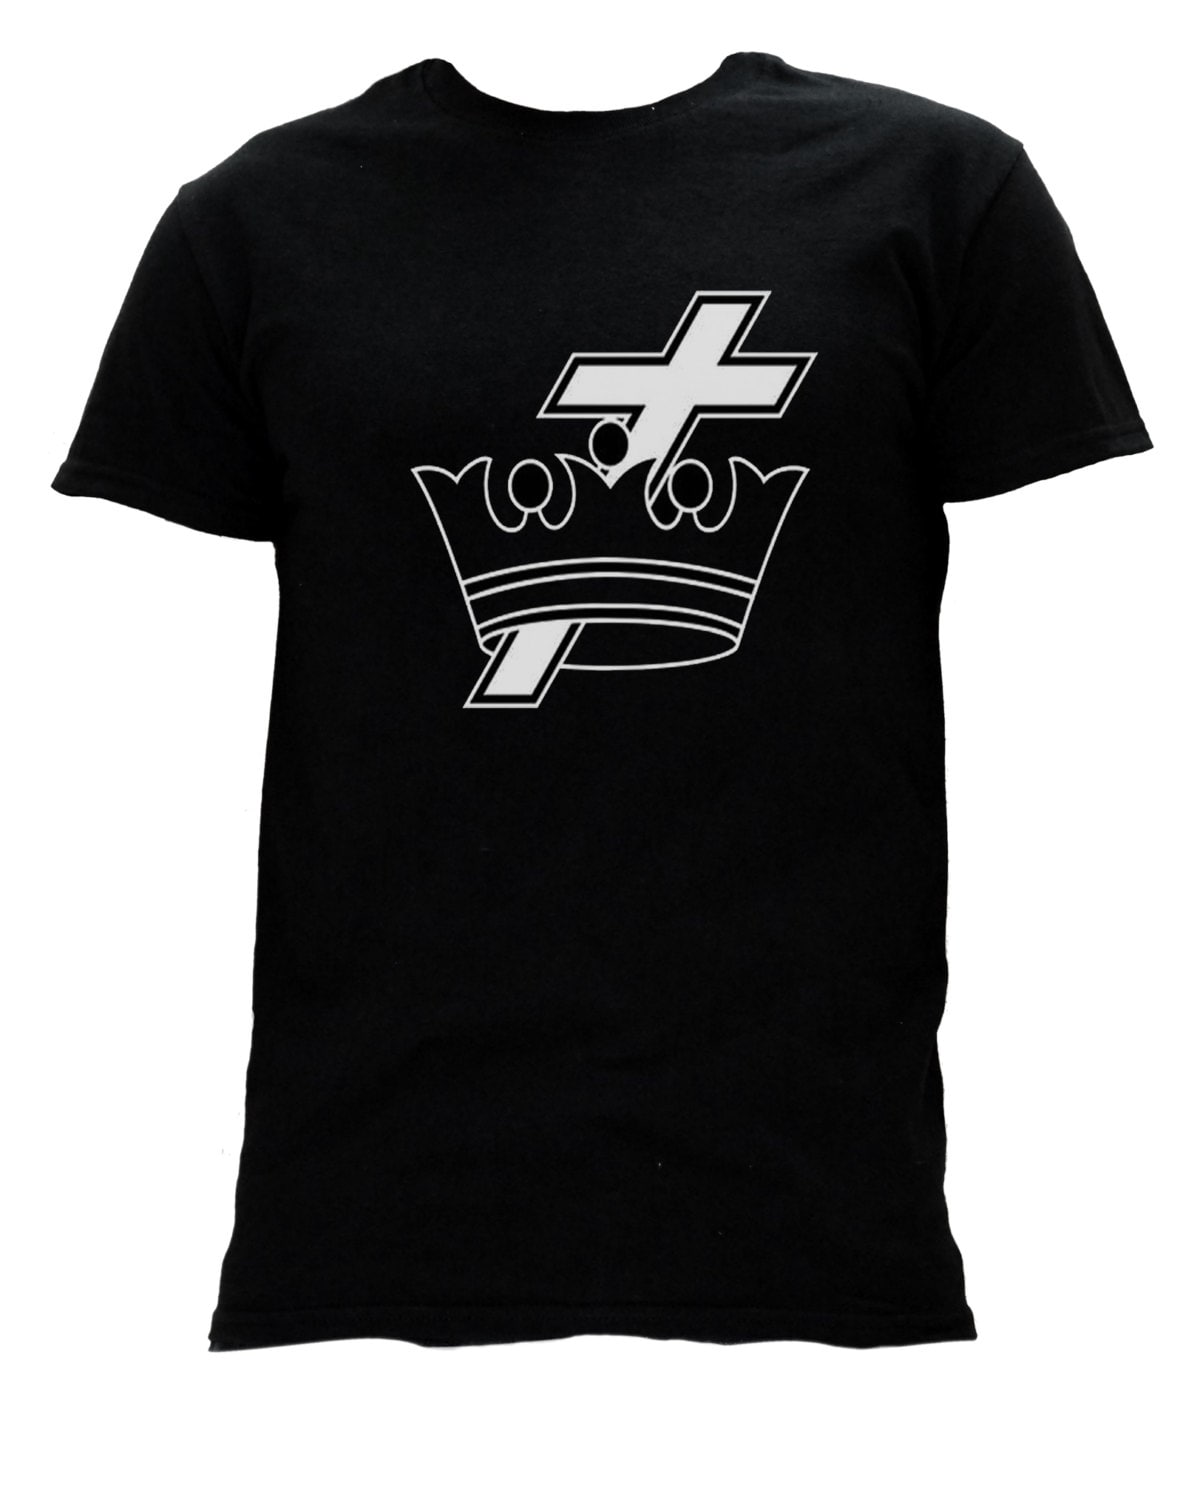 Knights Tempar Crown And Cross Men's T-shirt